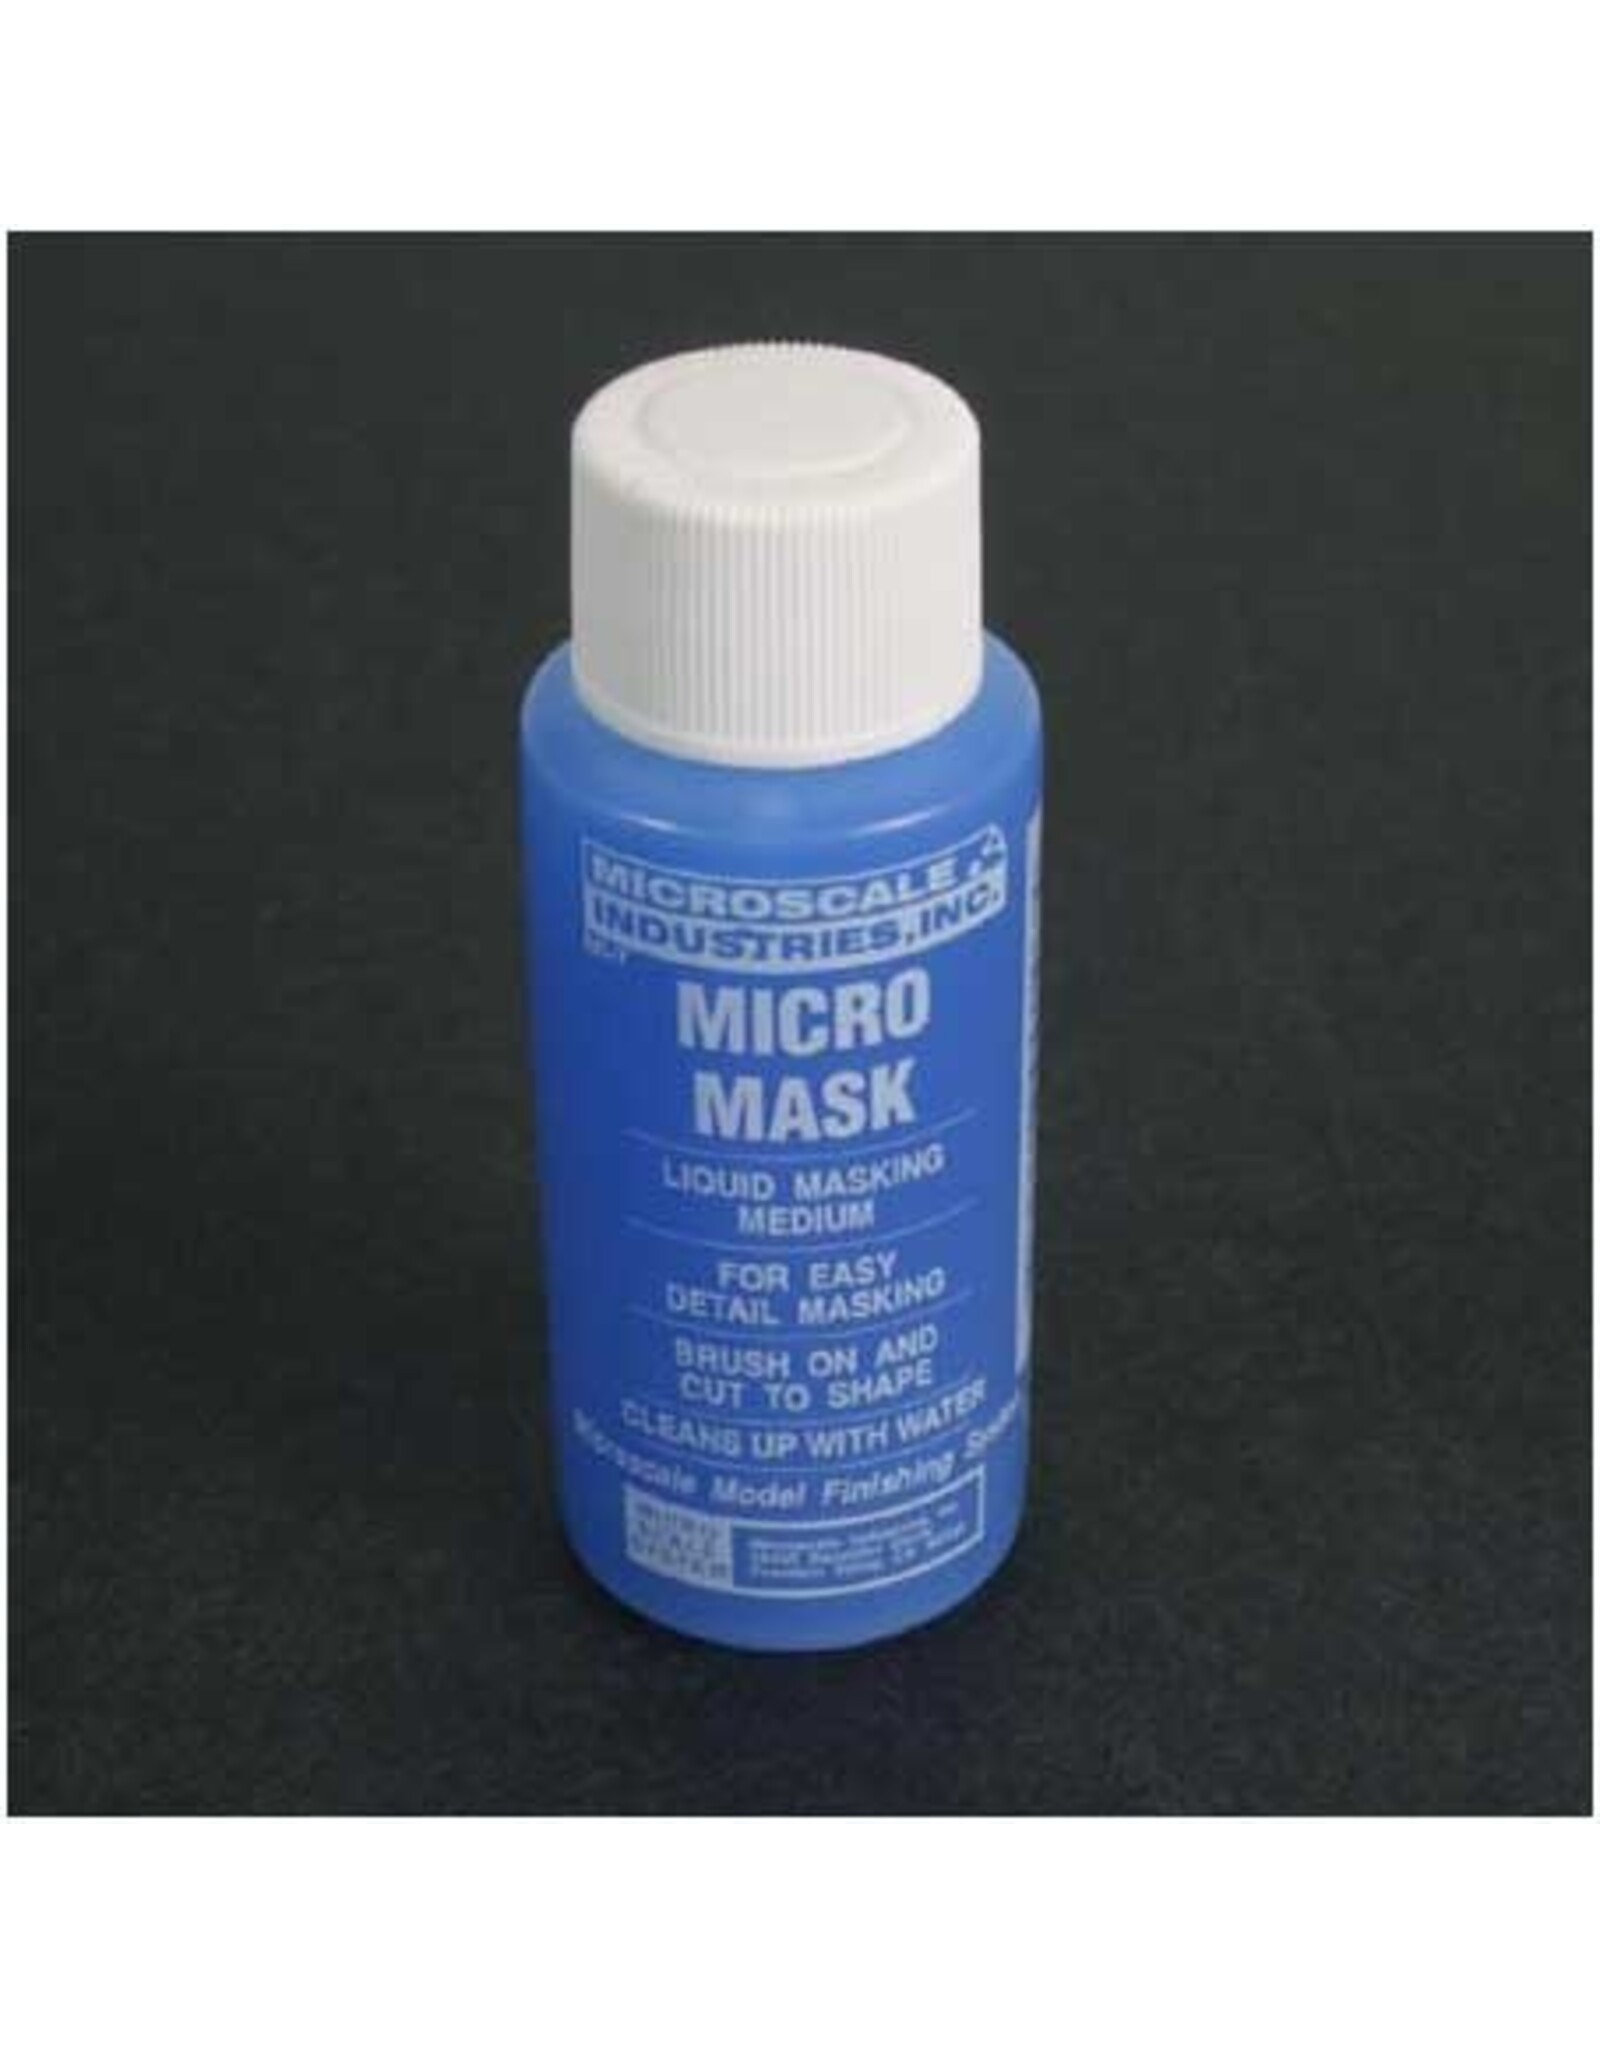 Microscale Micro Mask, 1 oz